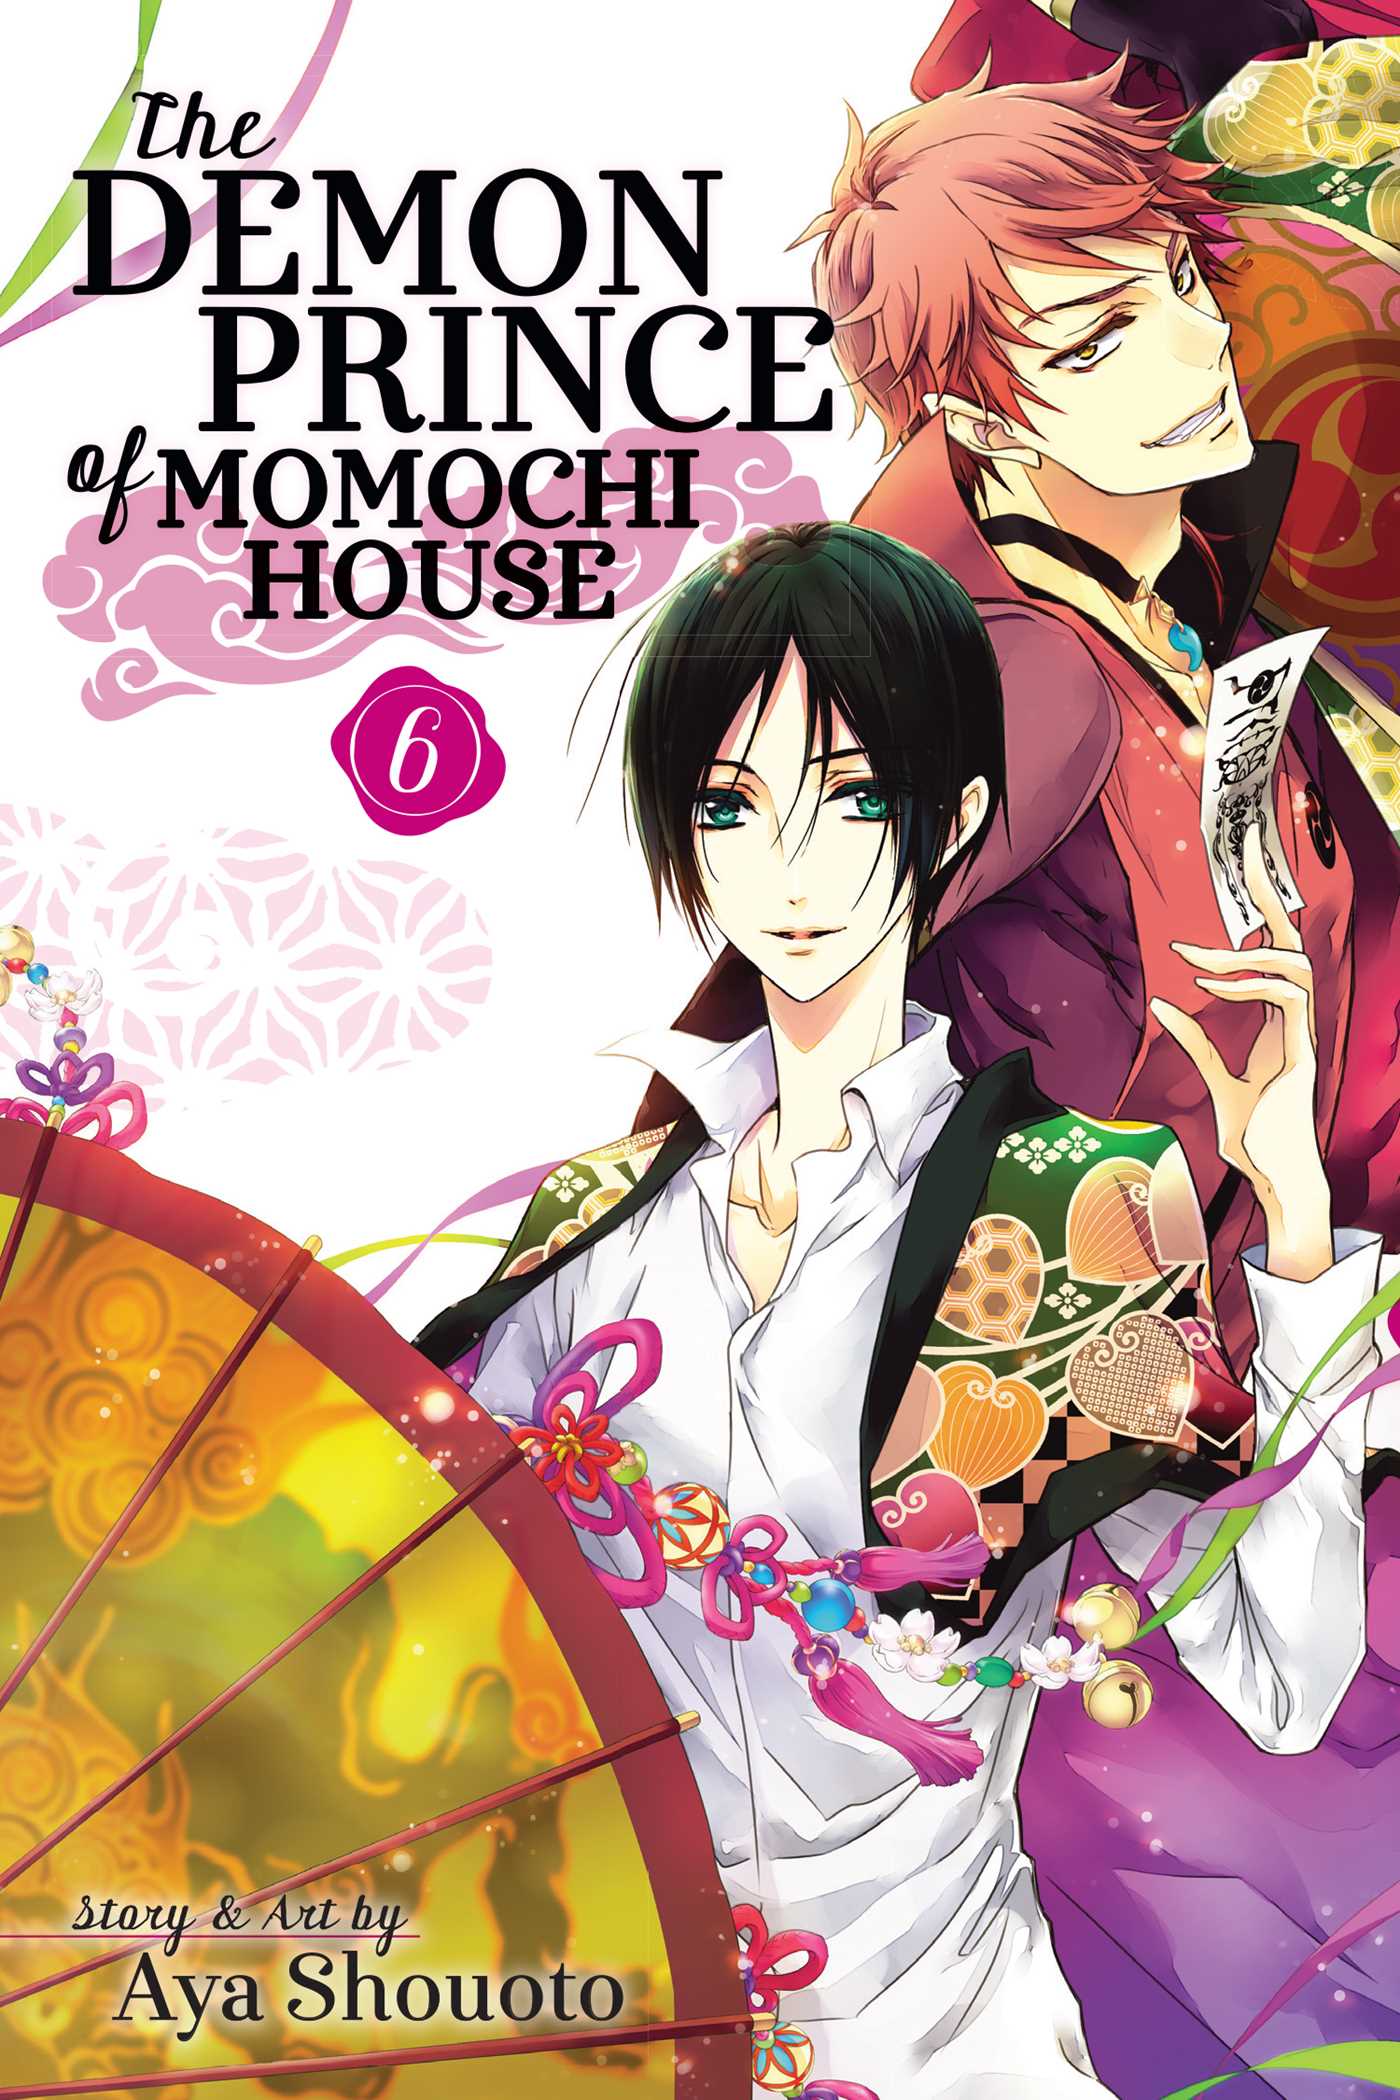 The Demon Prince of Momochi House - Wikipedia